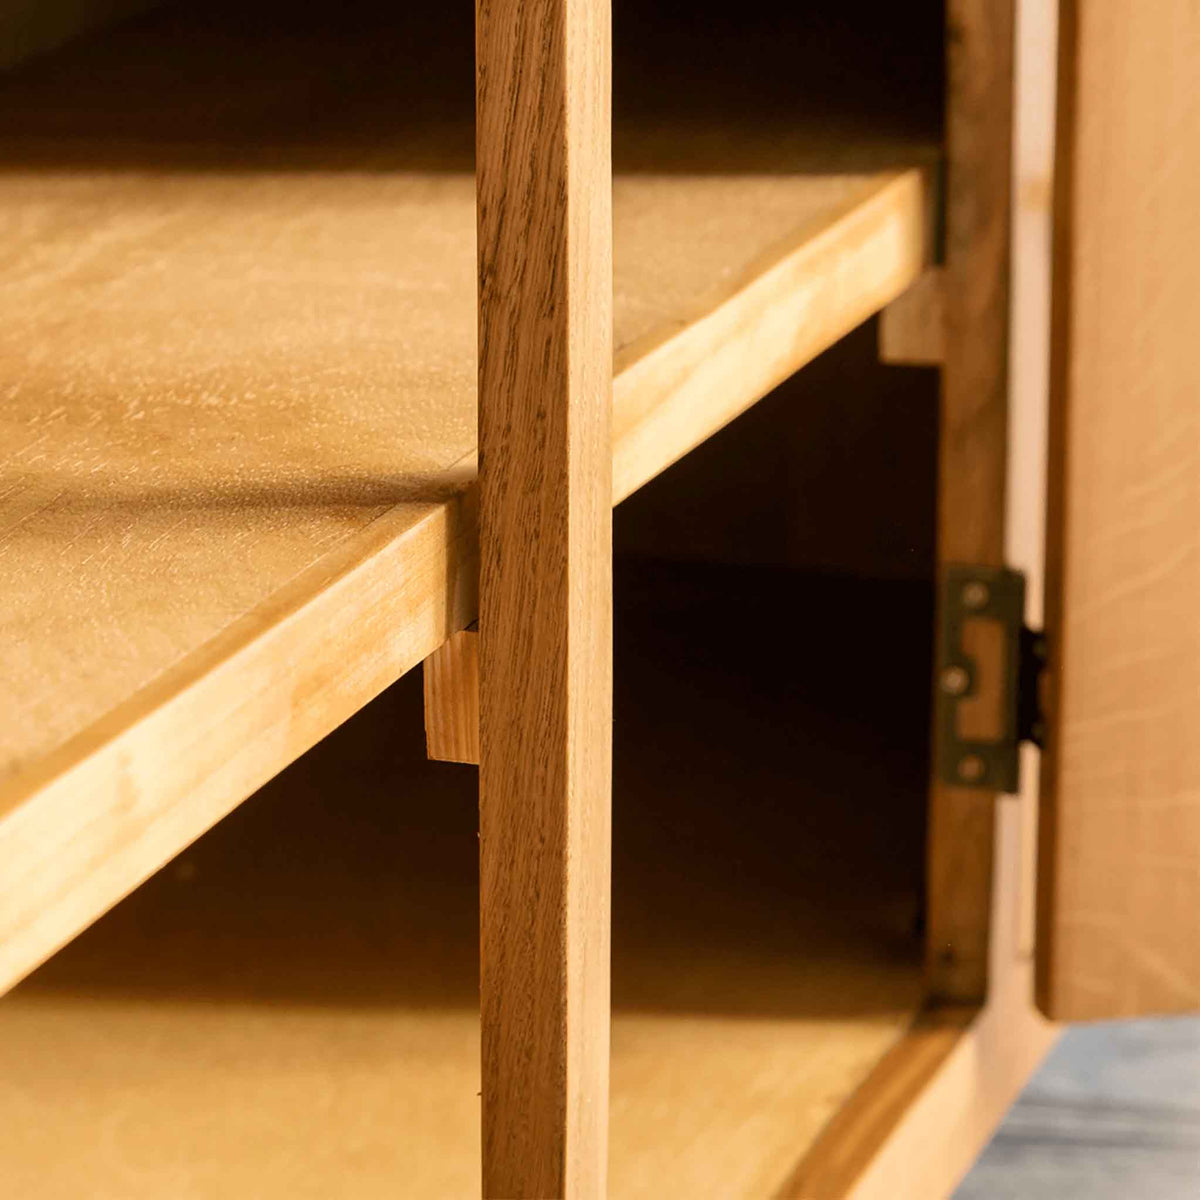 close up of internal shelves